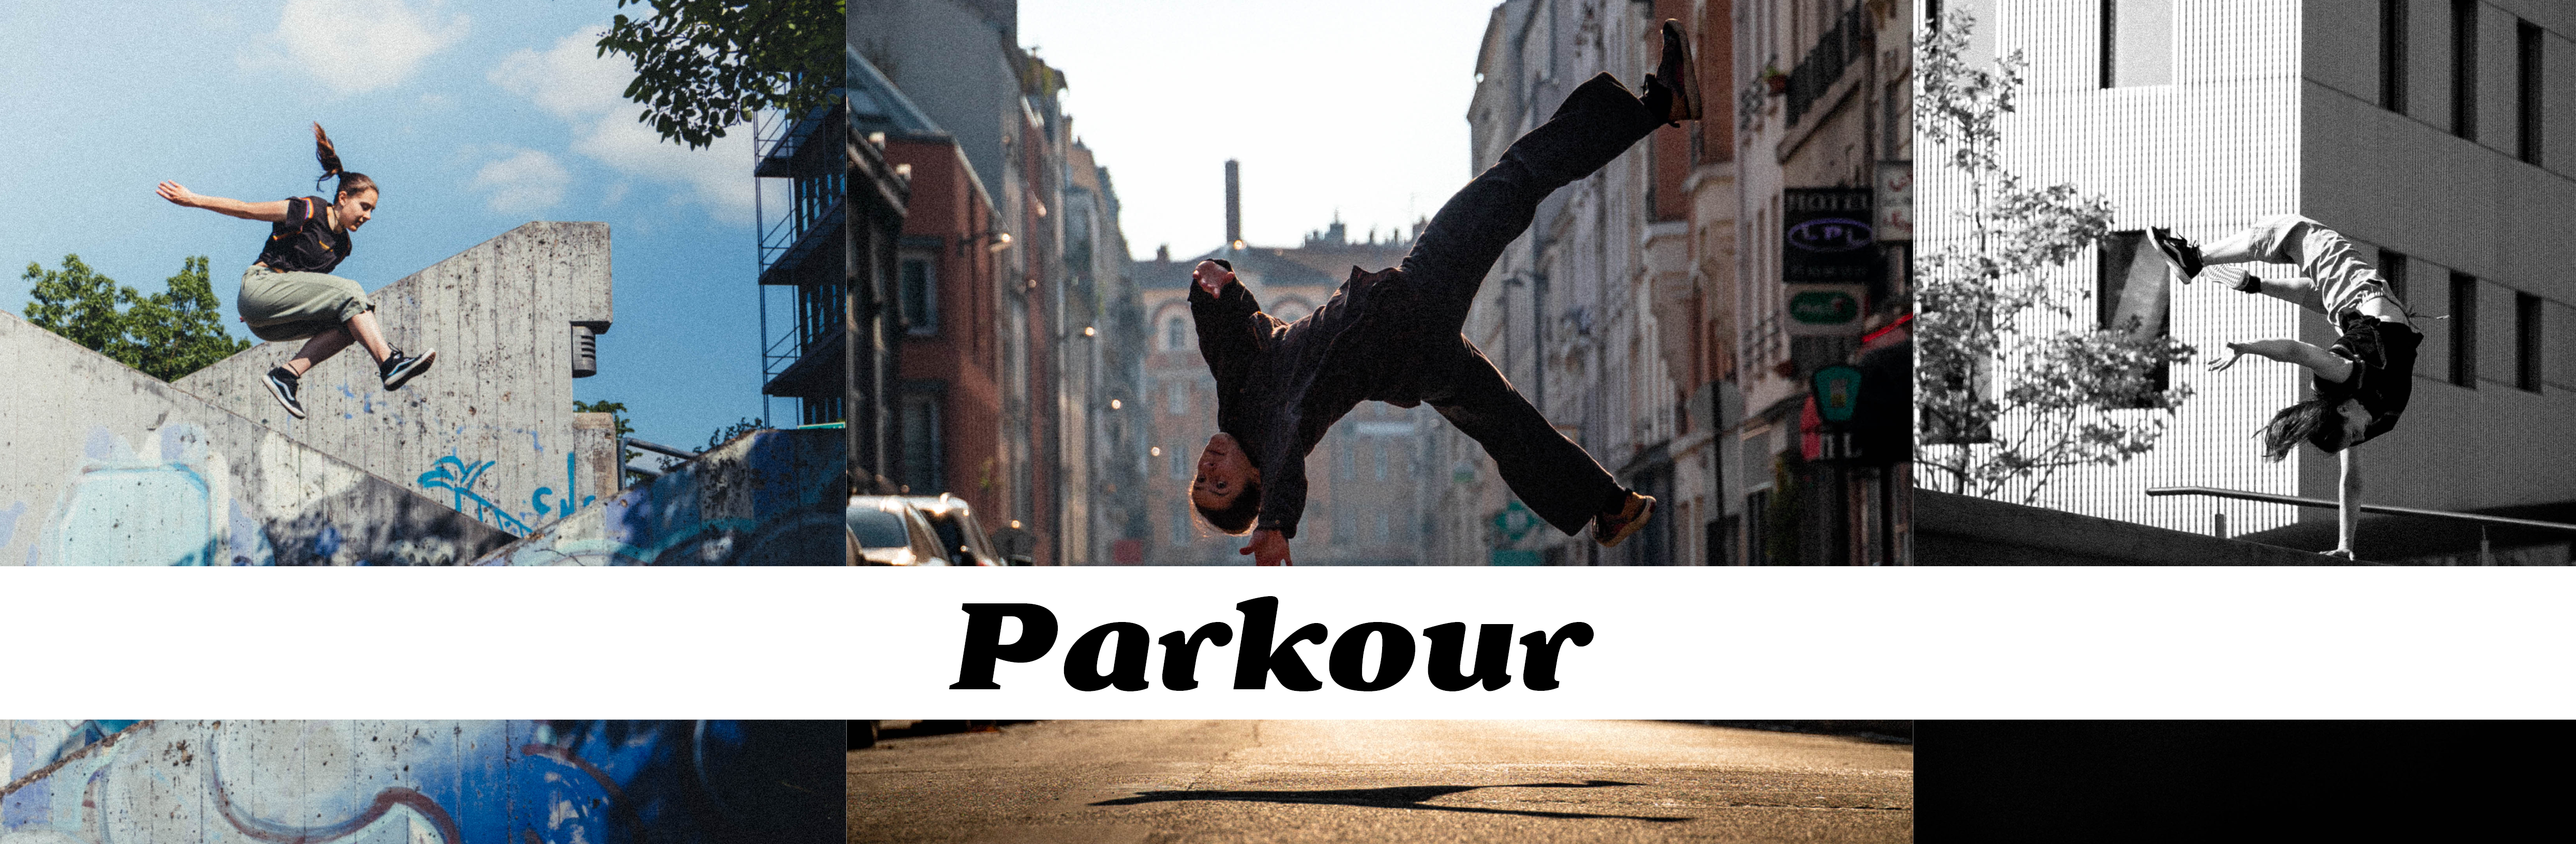 Parkour_header